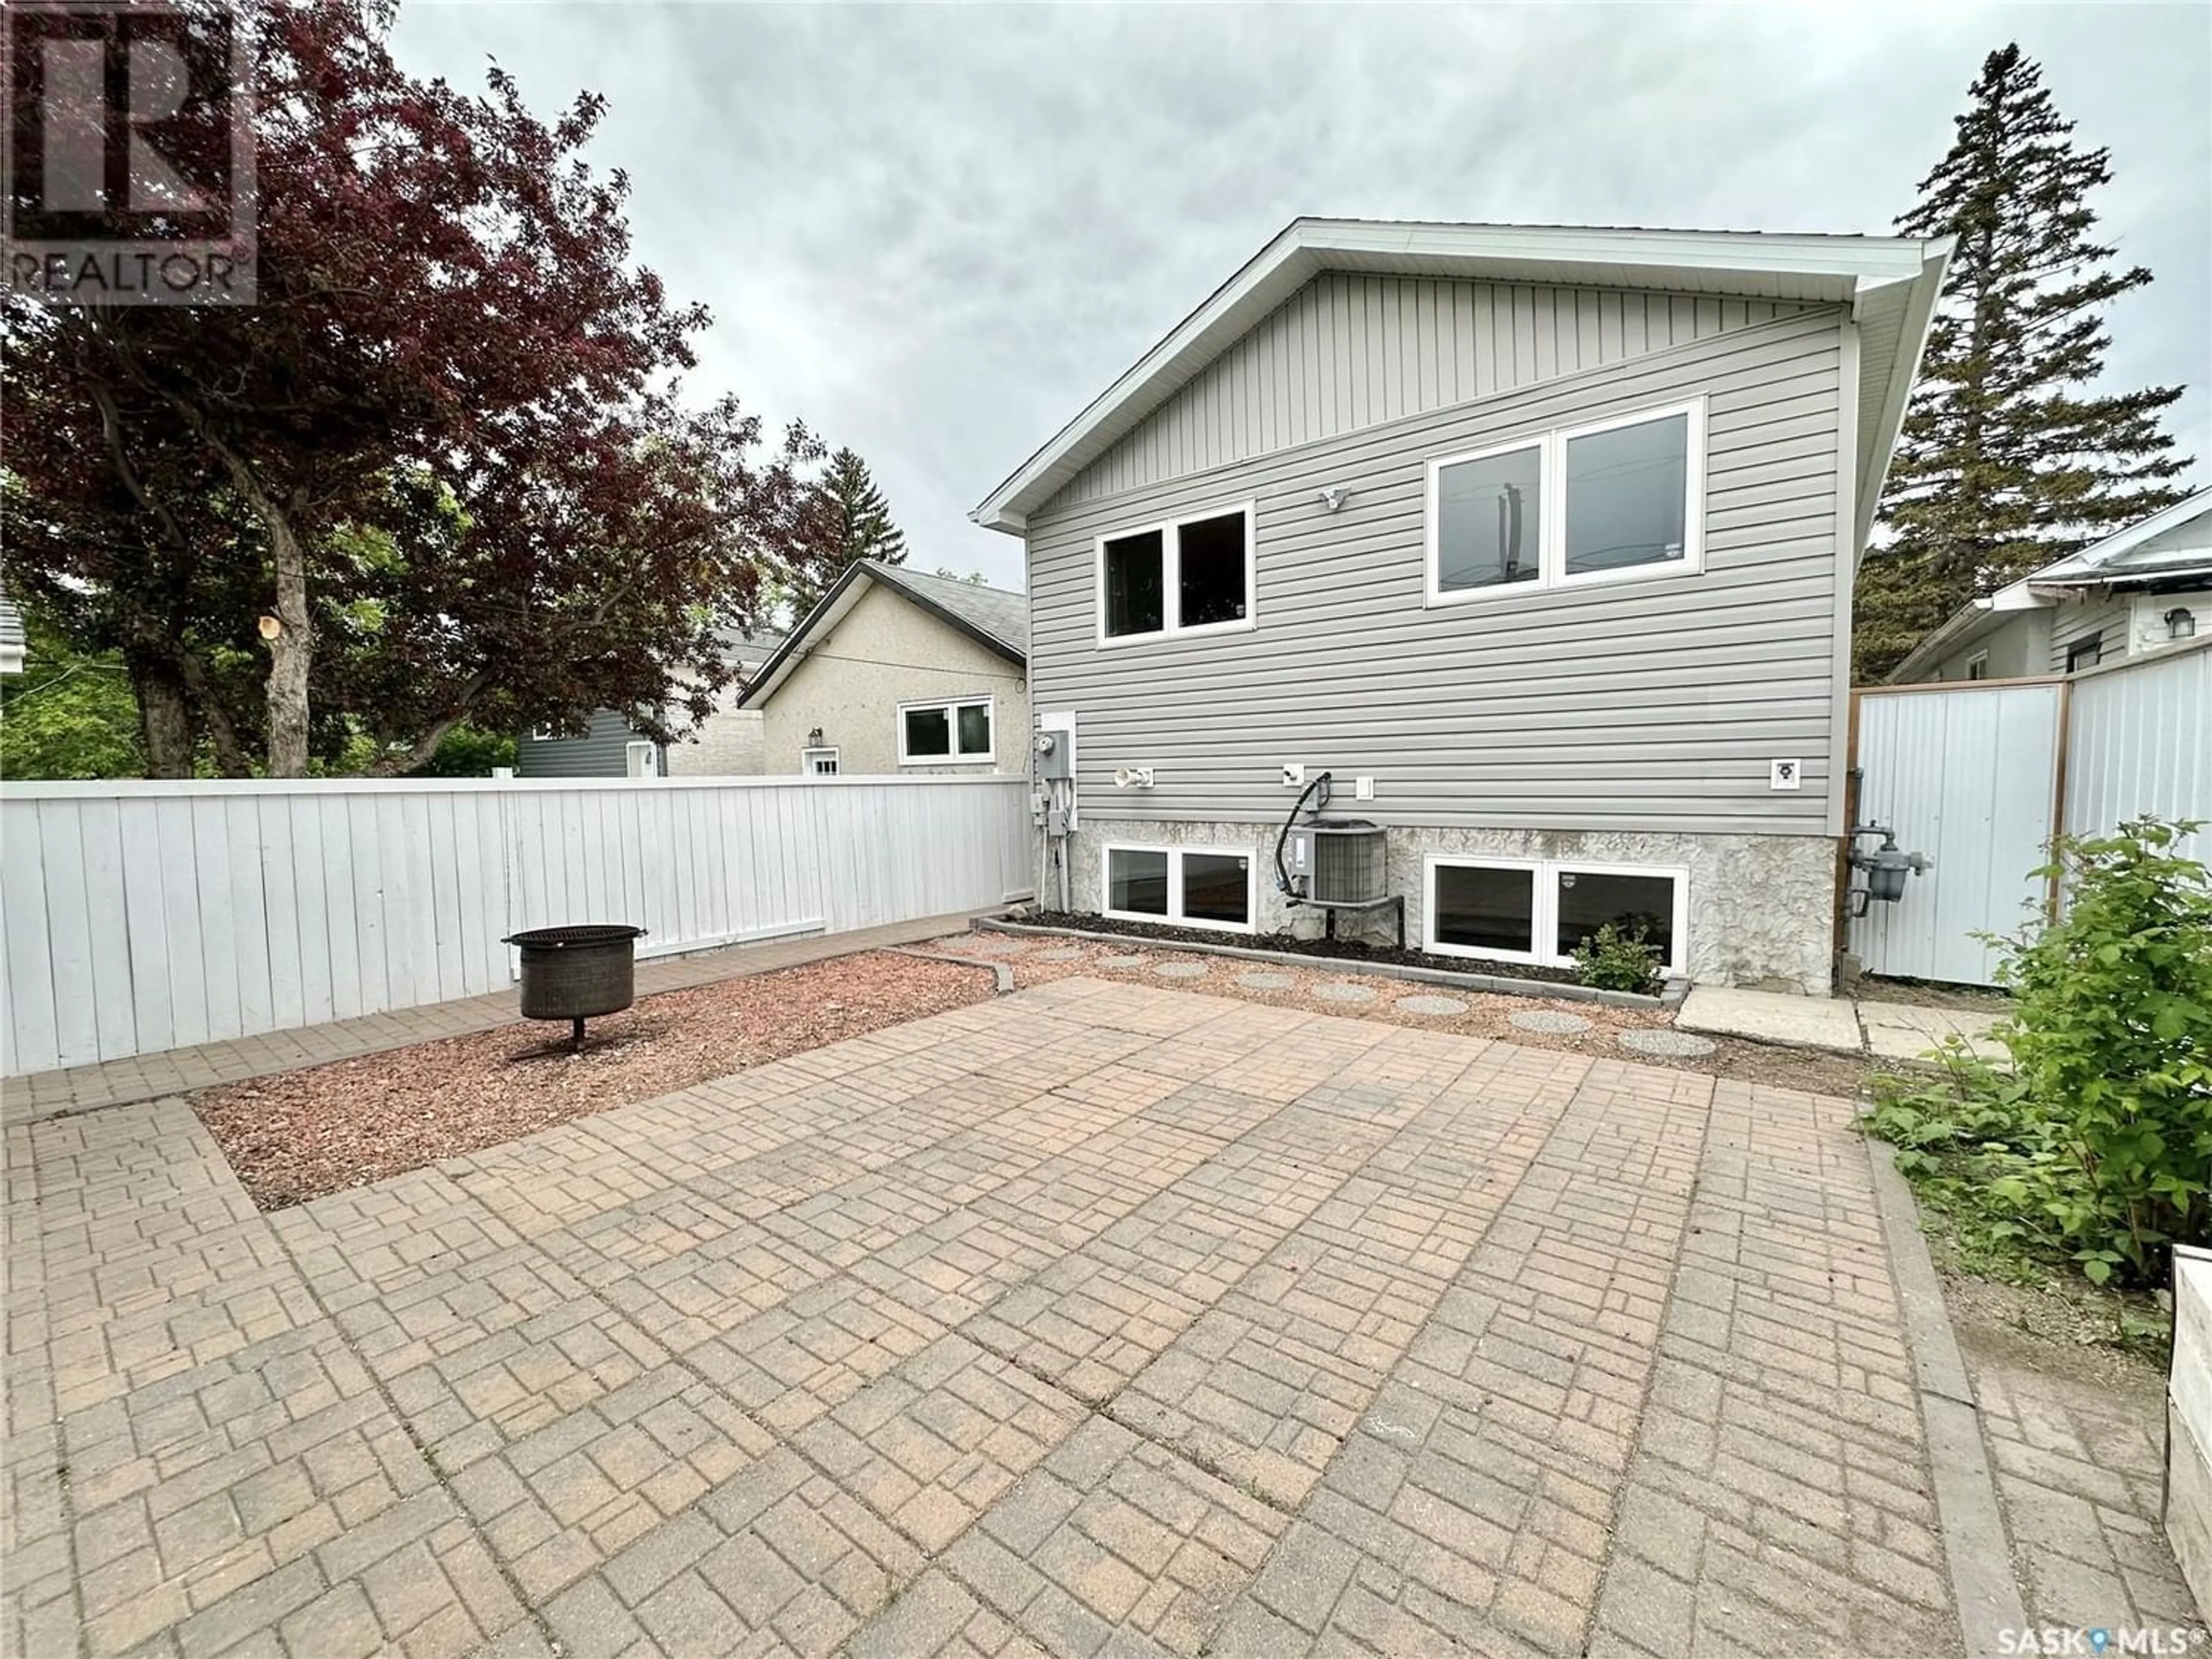 Home with vinyl exterior material for 2245 McDonald STREET, Regina Saskatchewan S4N2Y9